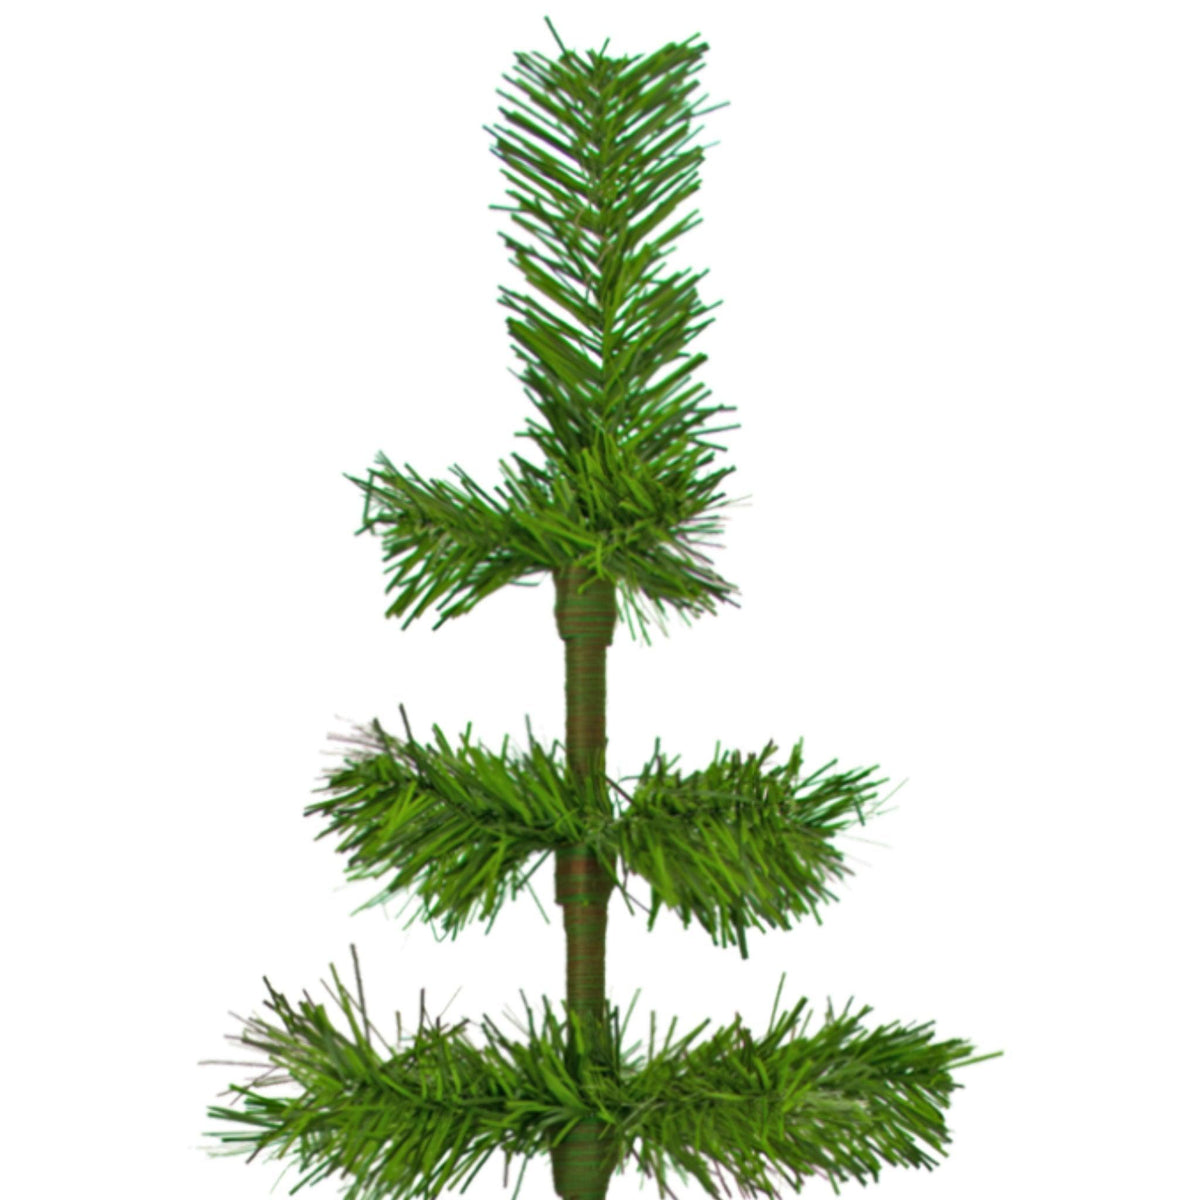 Top of the 4ft Alpine Green Tree.  Lee Display's 48in Tall Alpine Green Tinsel Christmas Tree on sale at leedisplay.com